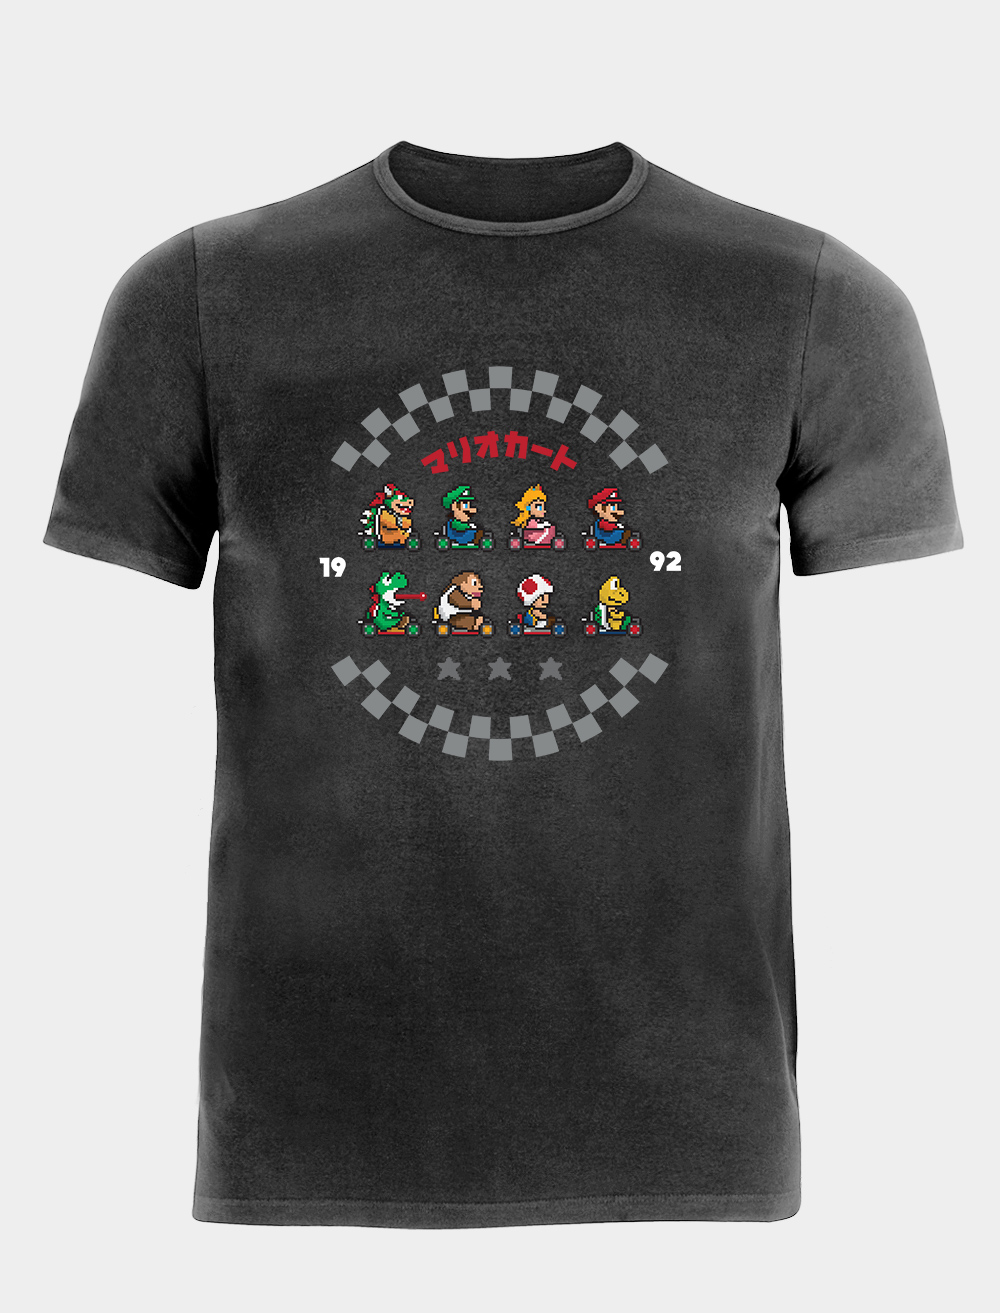 Mario Kart Shirt | Pixel Racer Tee